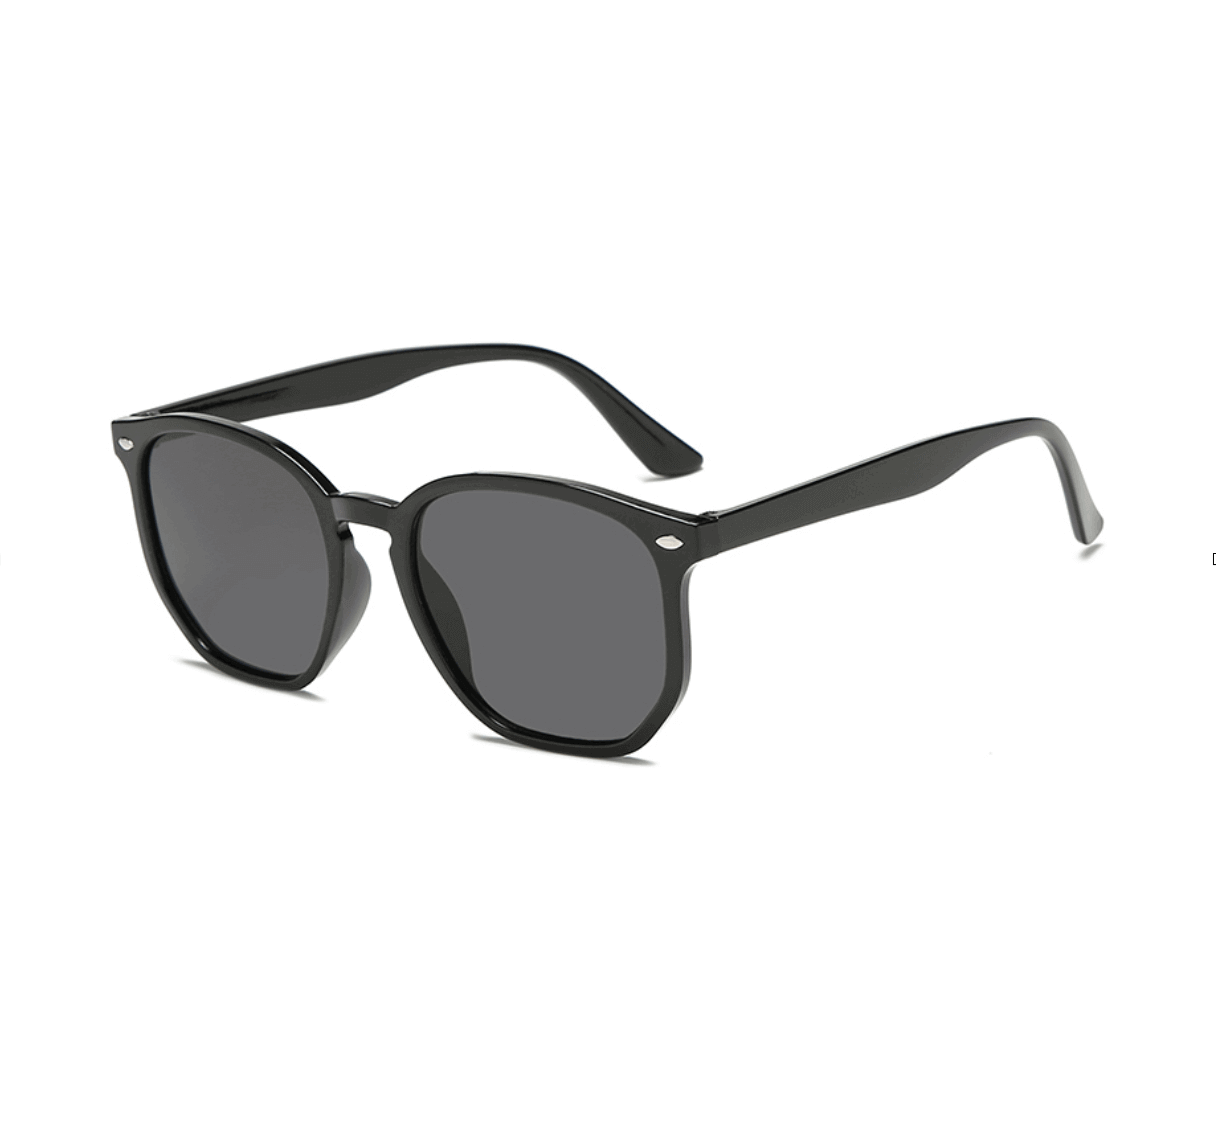 wholesale sunglasses polarized, polarized sunglass lenses wholesale, bulk polarized sunglasses, China sunglasses supplier